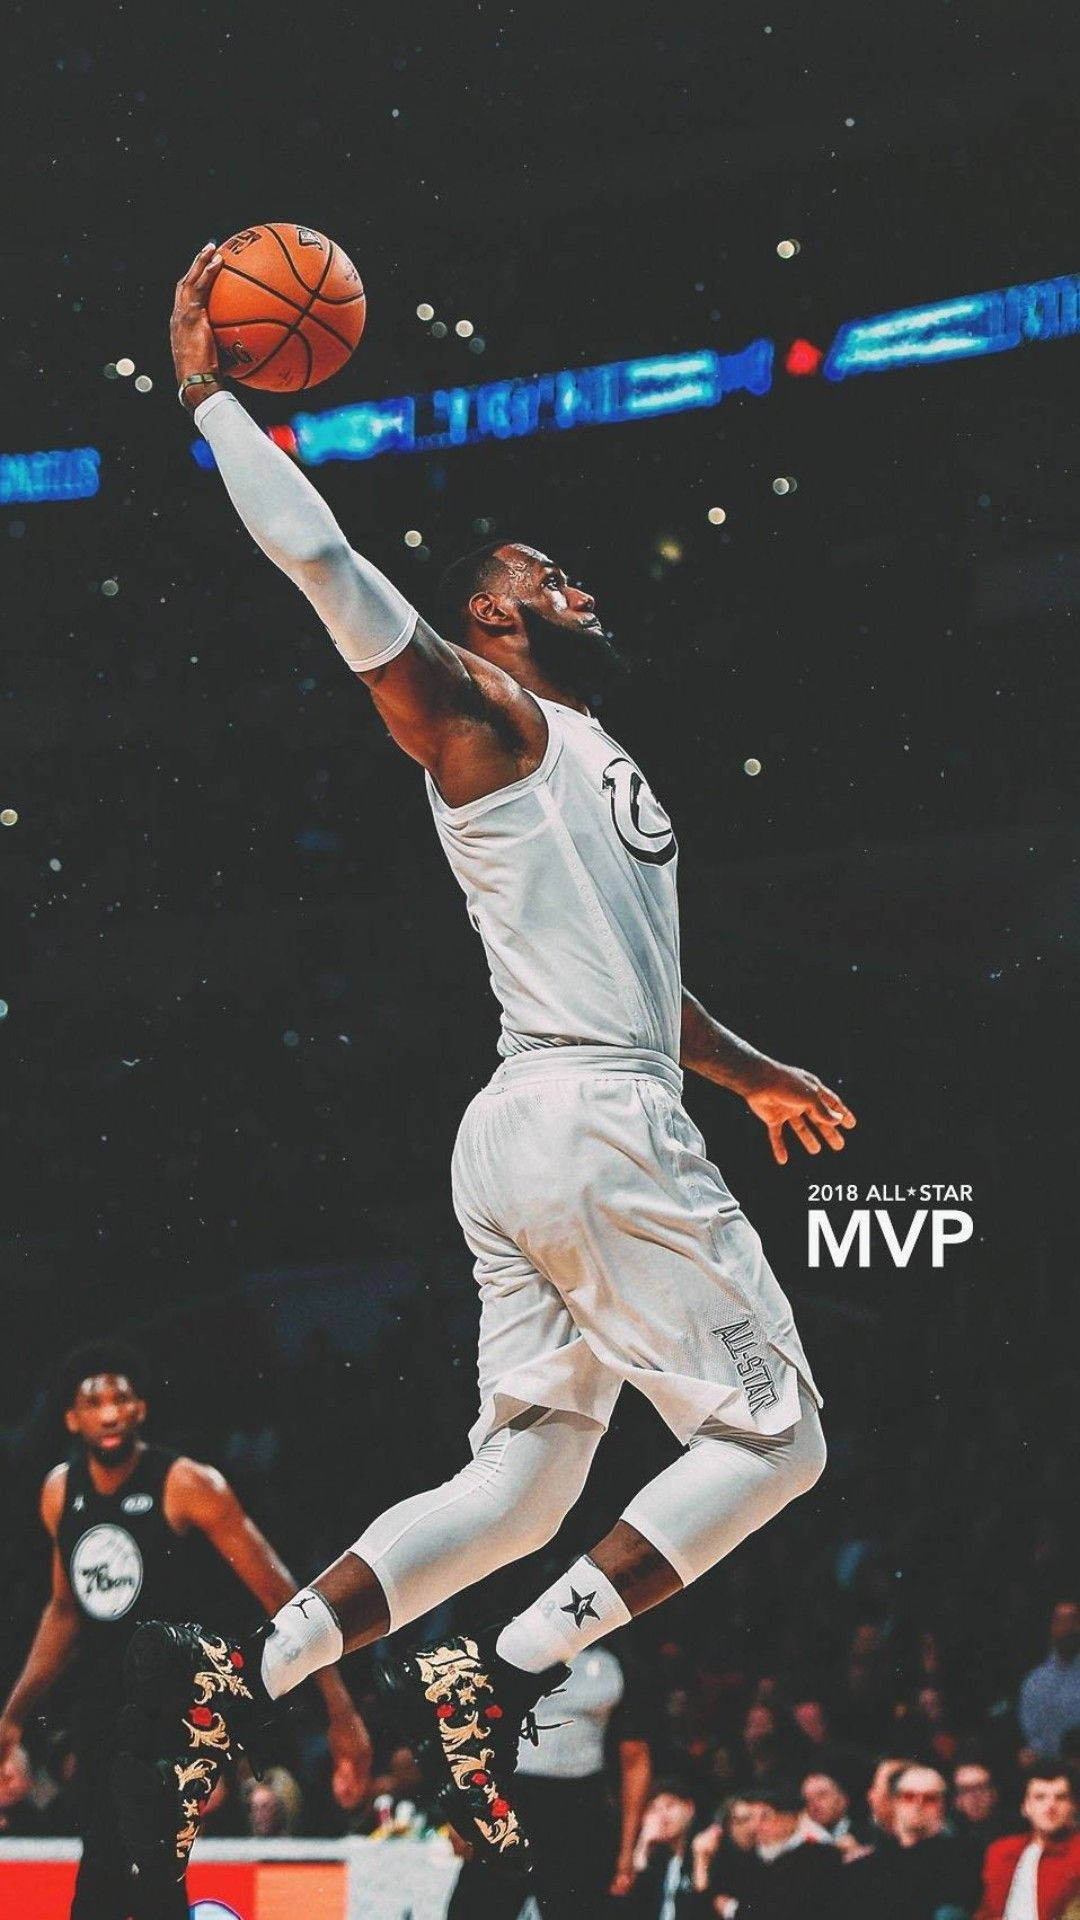 Download Lebron James slams in the 2018 NBA All Star MVP Dunk Wallpaper - Lebron James